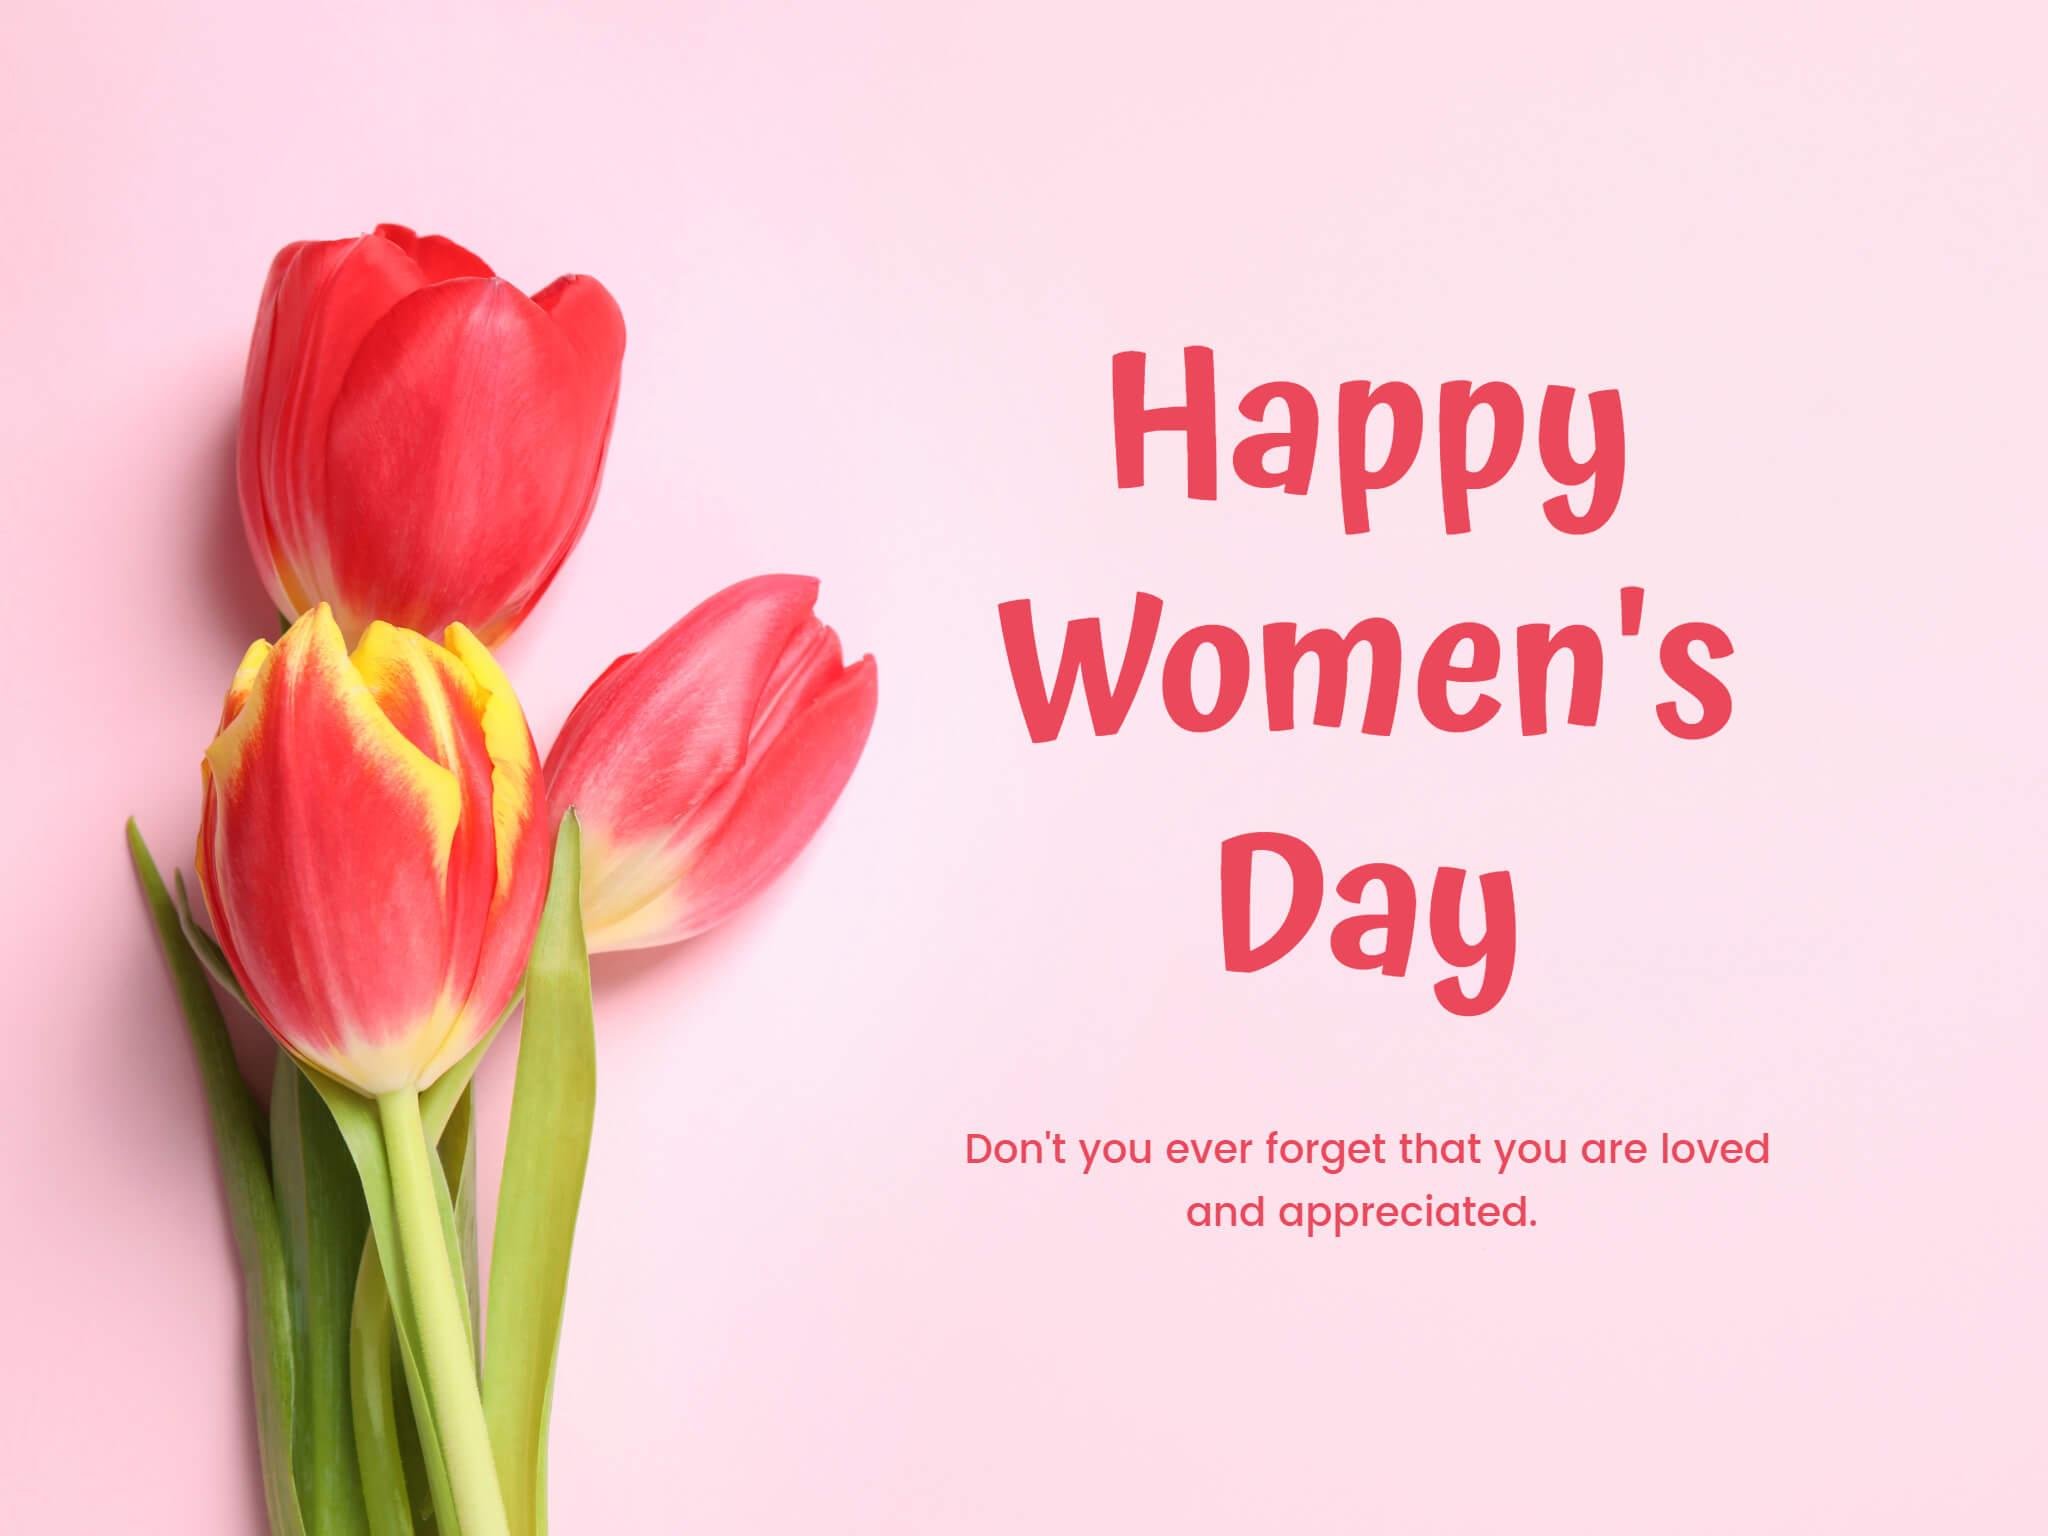 Celebrate March 8 with Best International Women's Day Ideas